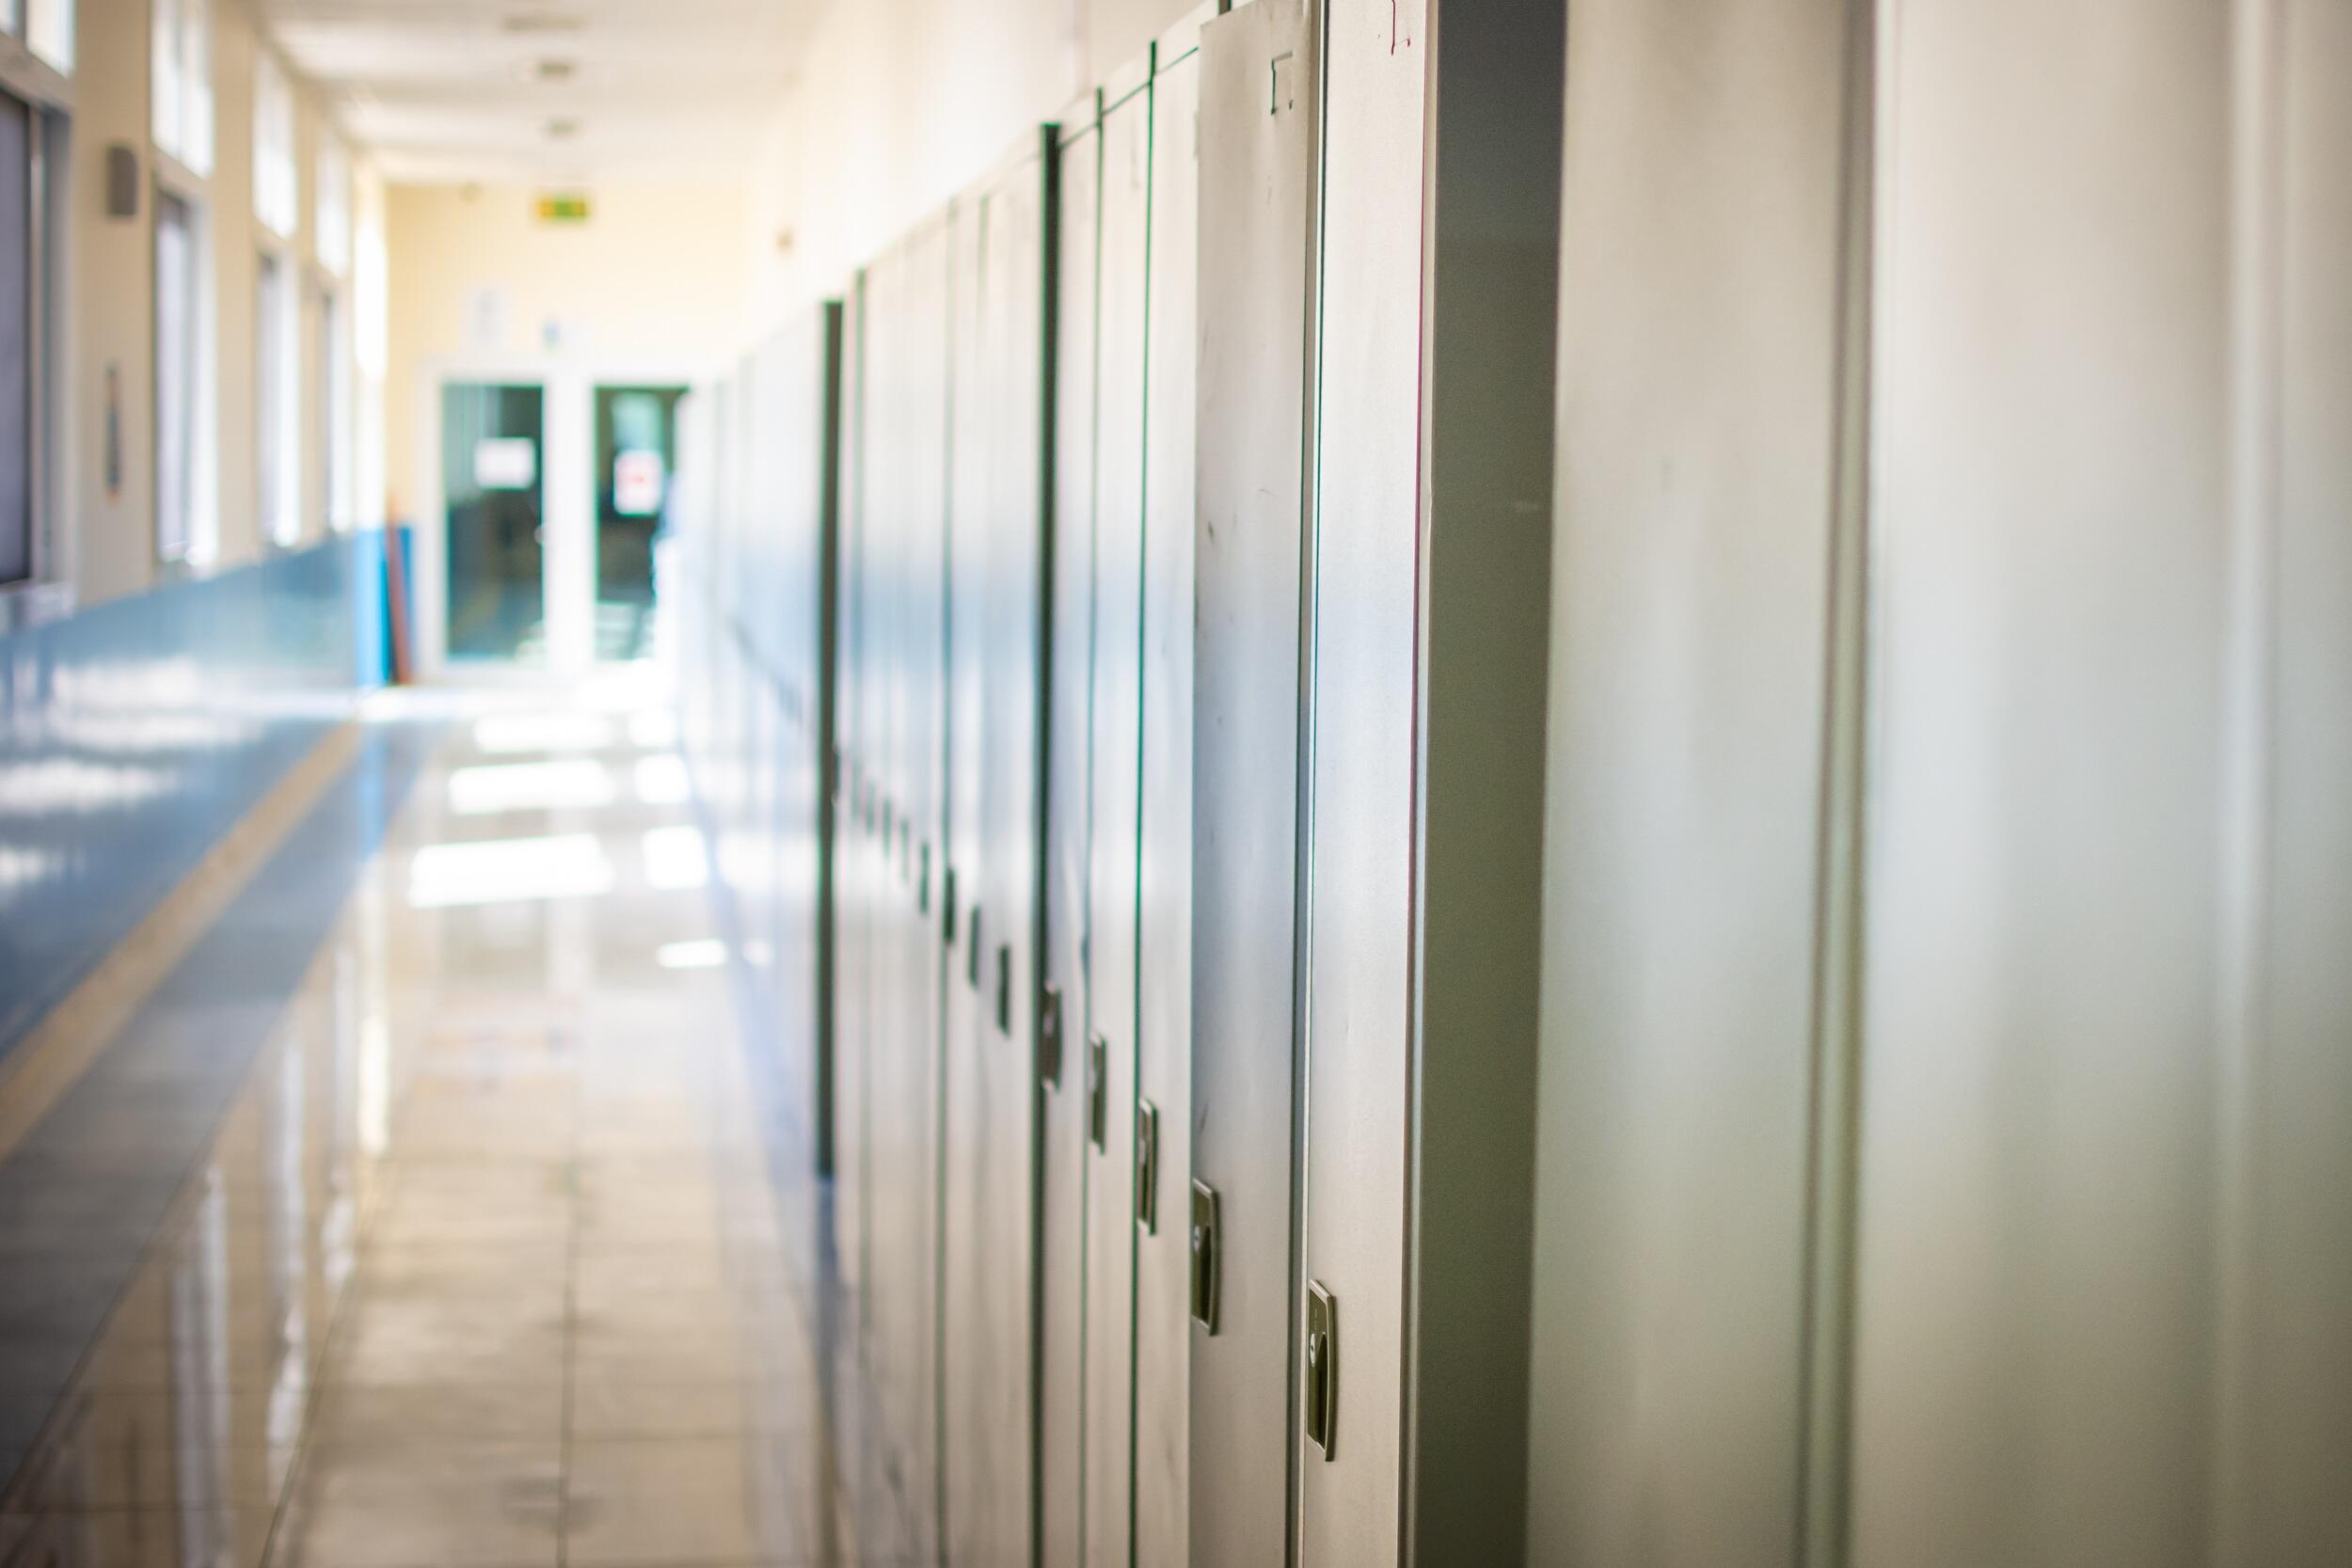 A school hallway with lockers.